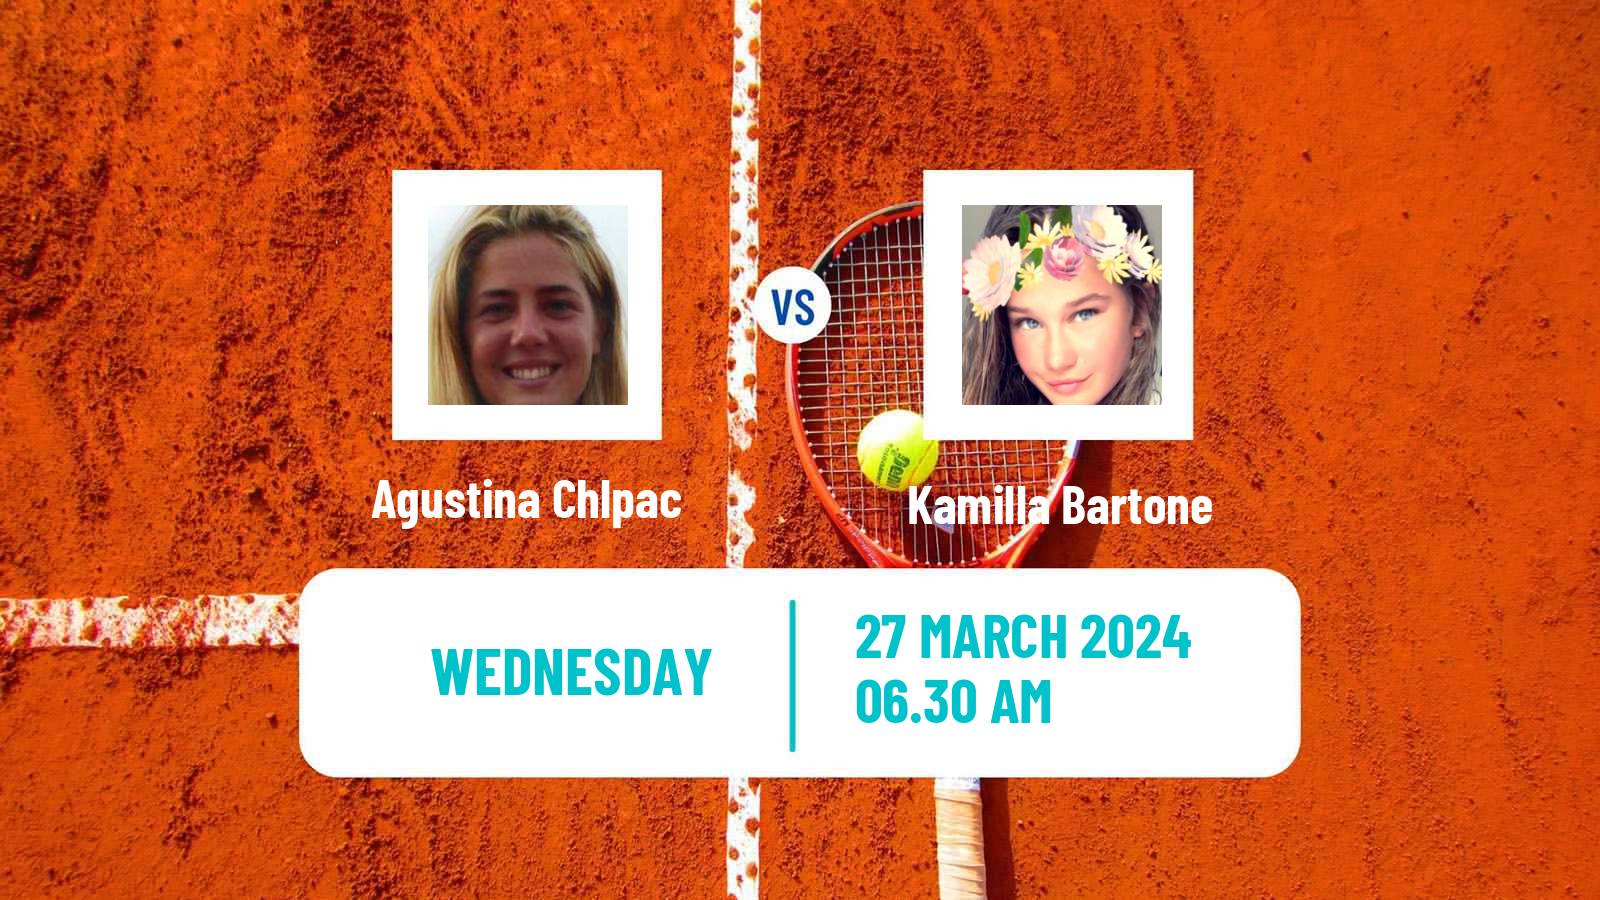 Tennis ITF W15 Antalya 7 Women Agustina Chlpac - Kamilla Bartone